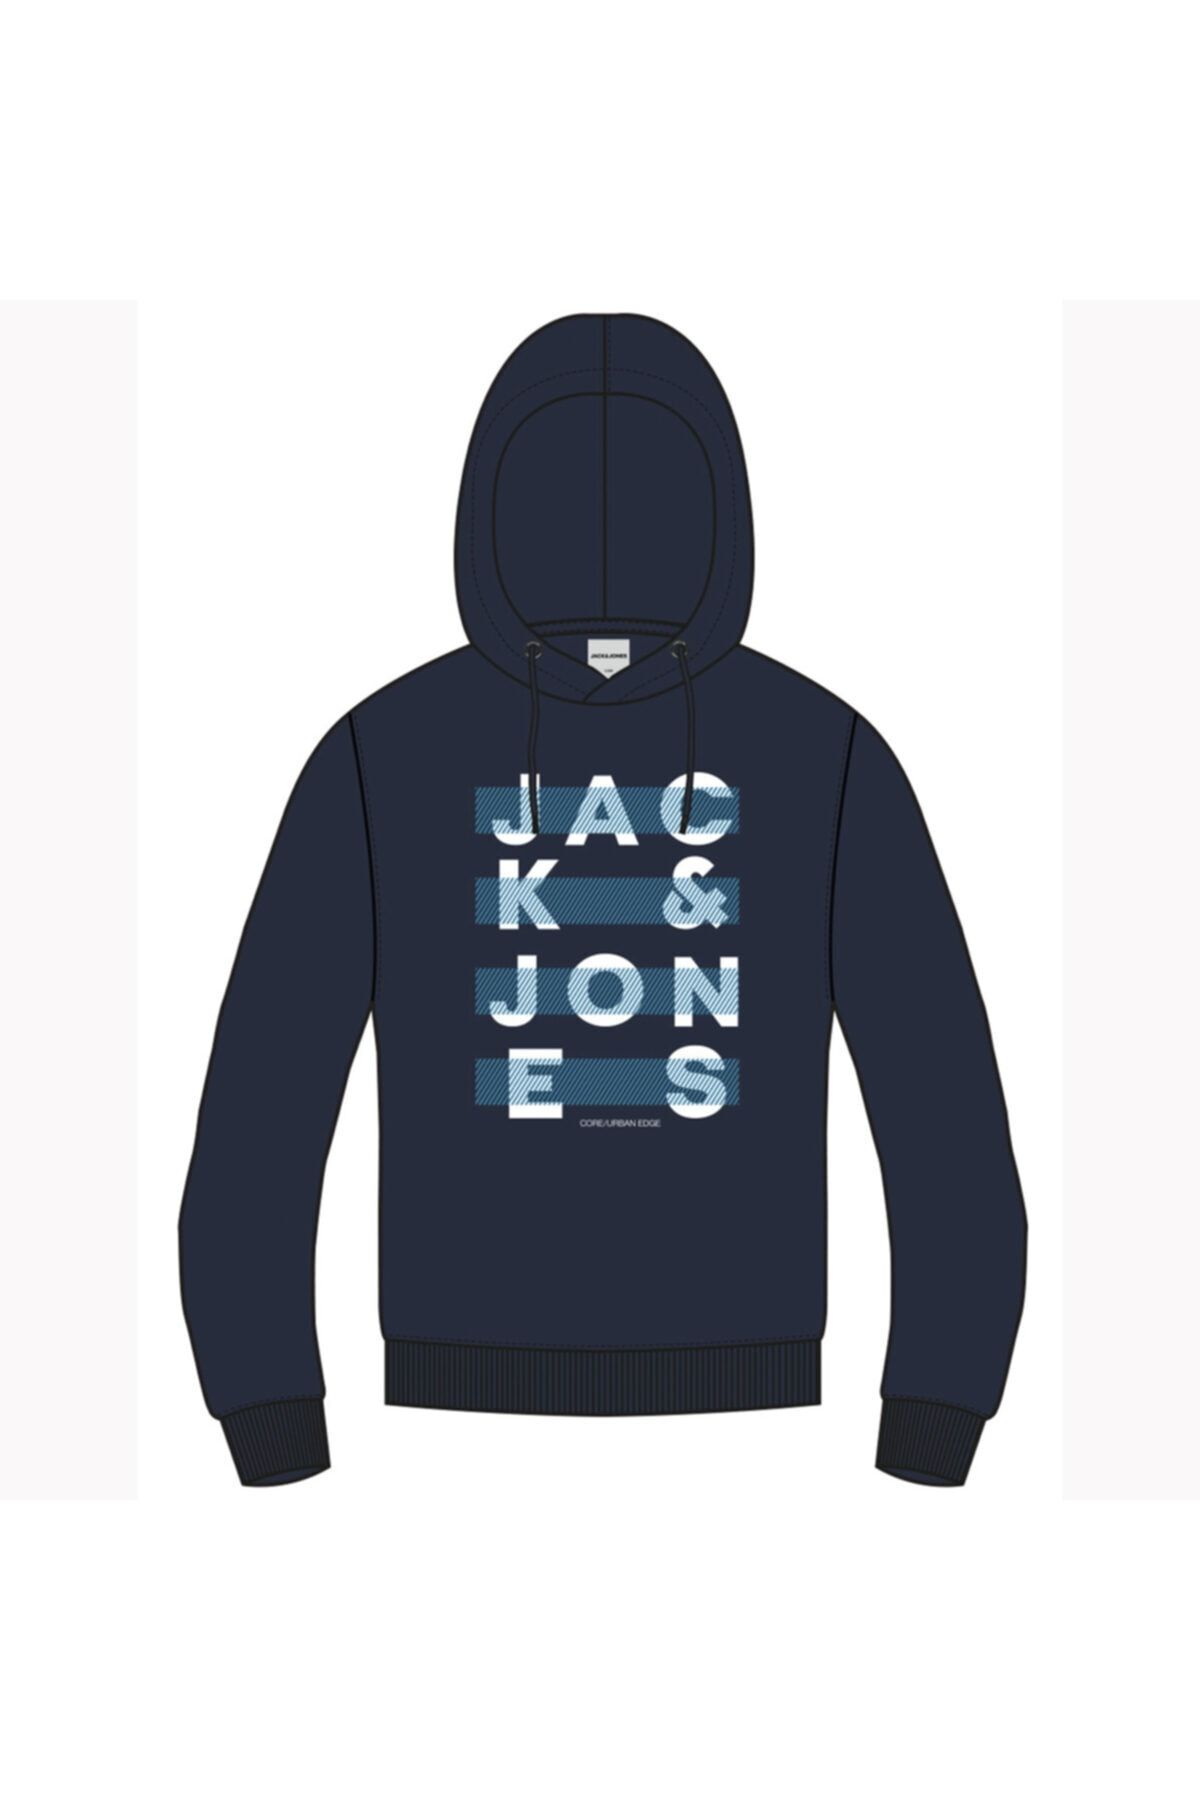 Jack & Jones Jumbo Erkek Lacivert Sweatshirt (12182887-nbl)